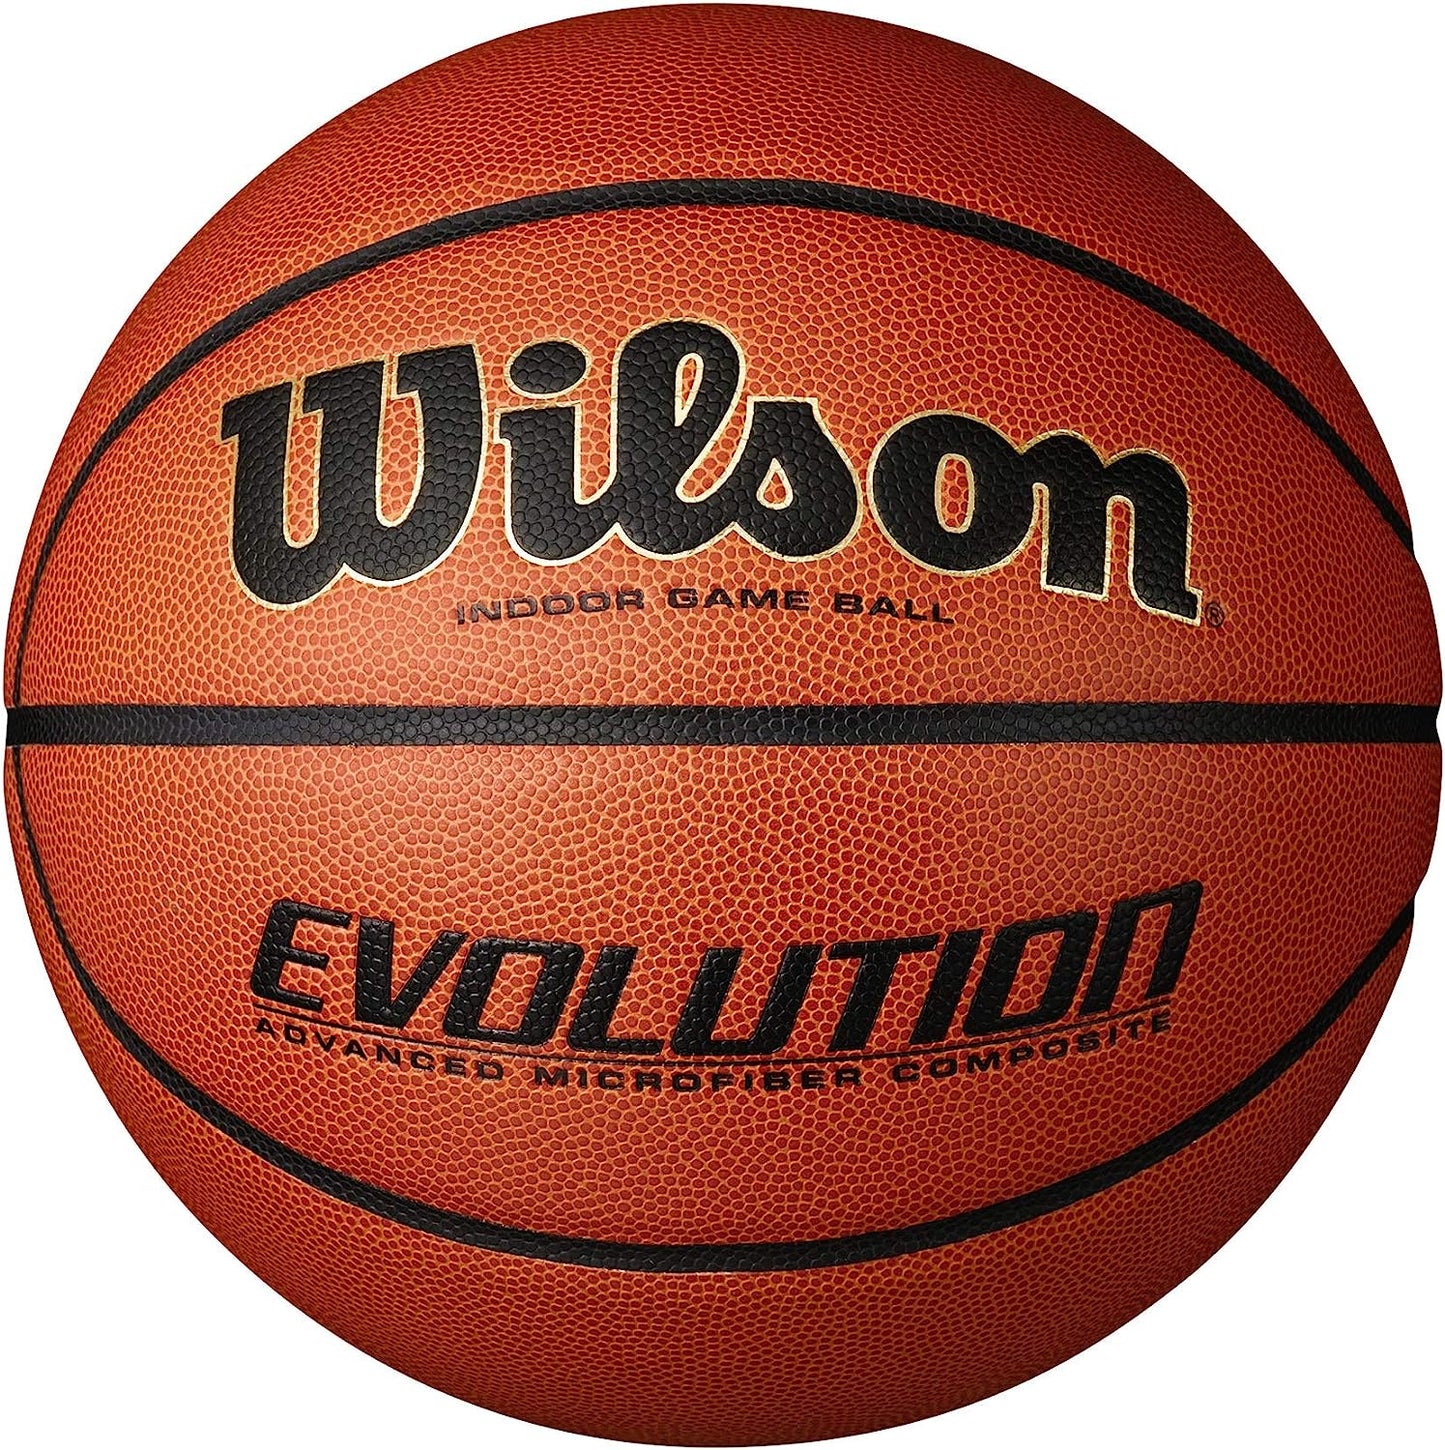 Wilson Evolution Indoor Game Basketball Official